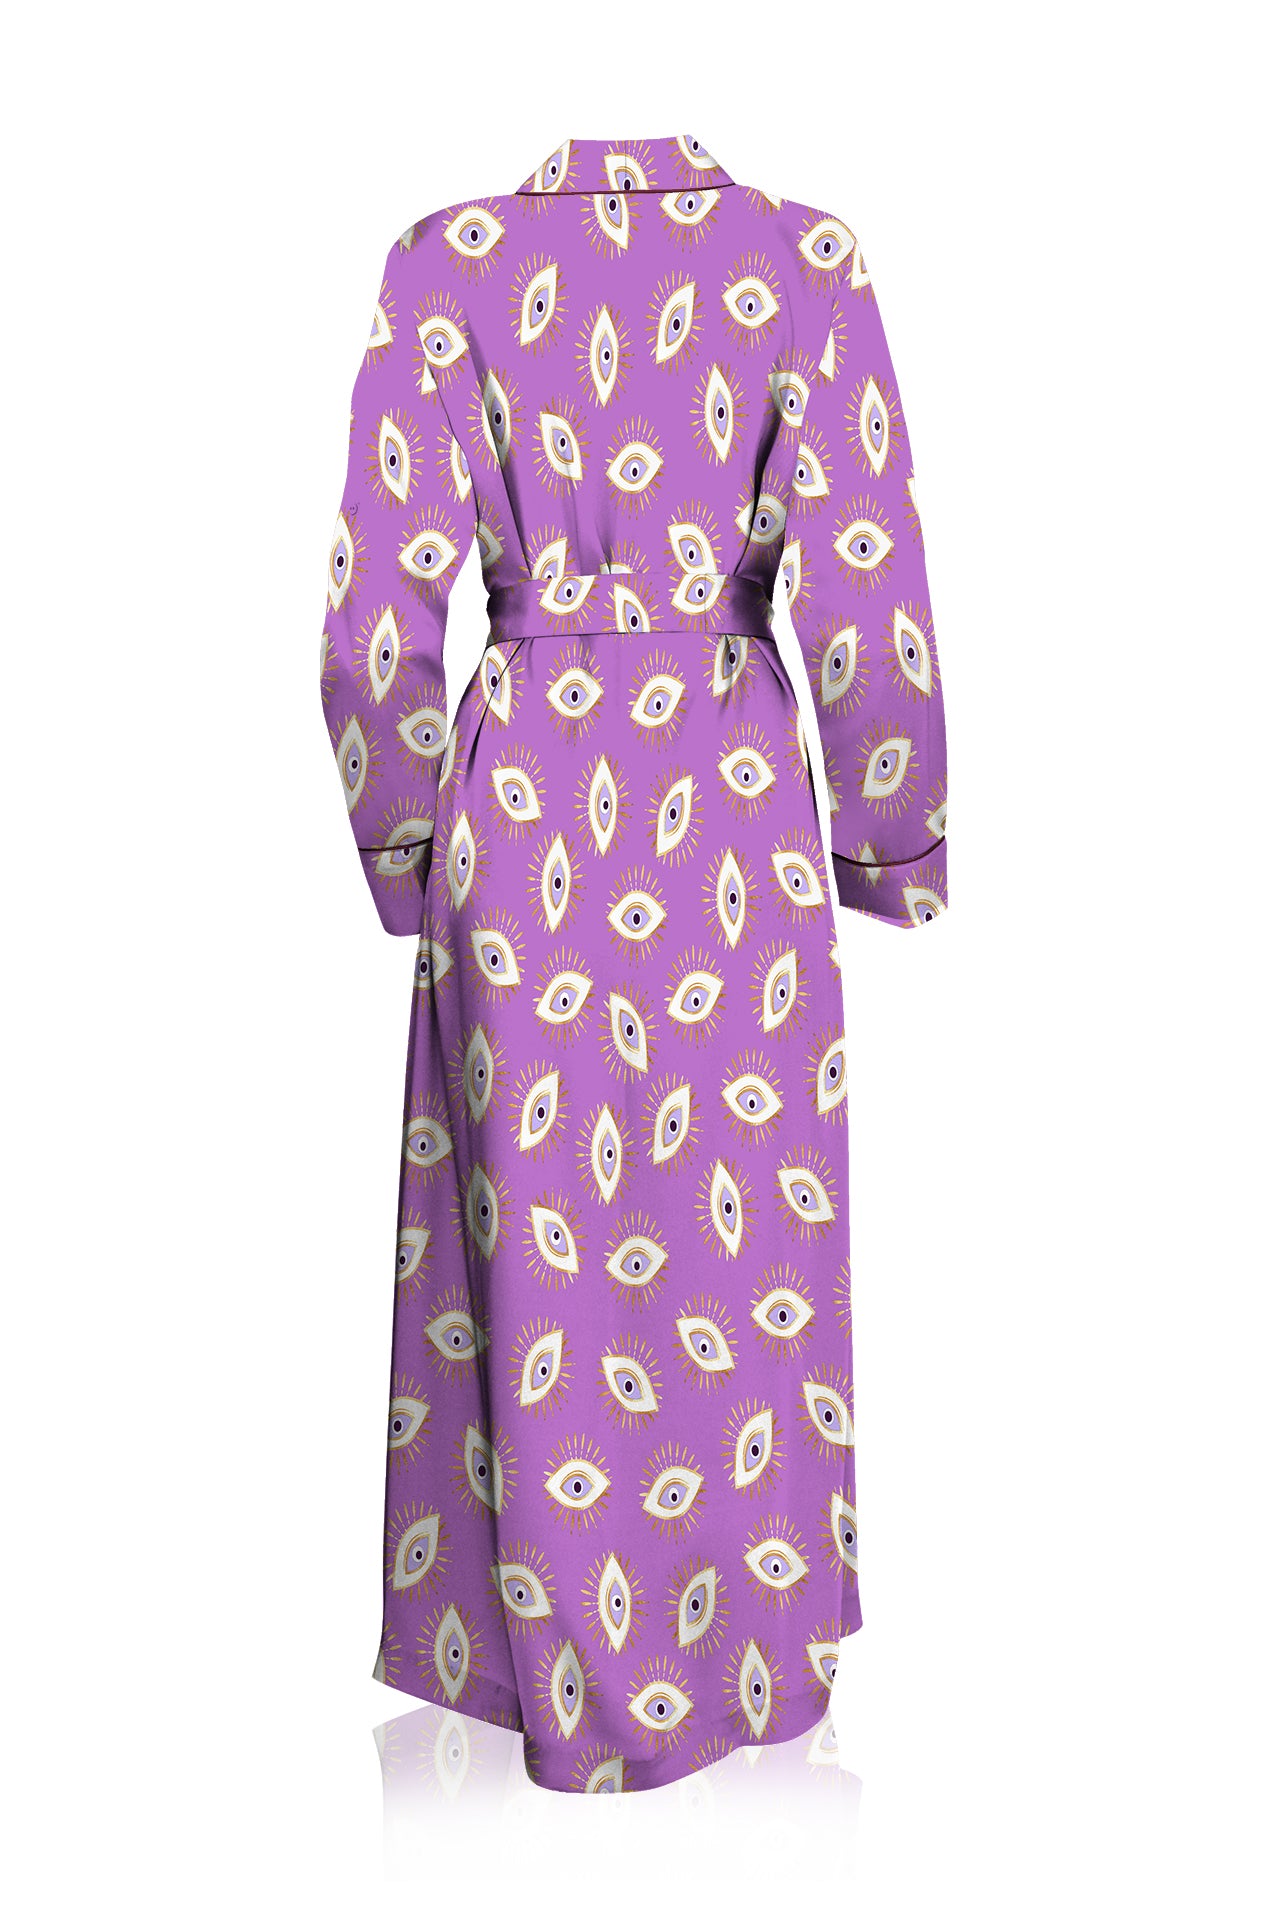 "lavender silk robe" "kimonos for women" "beautiful kimono" "Kyle X Shahida"